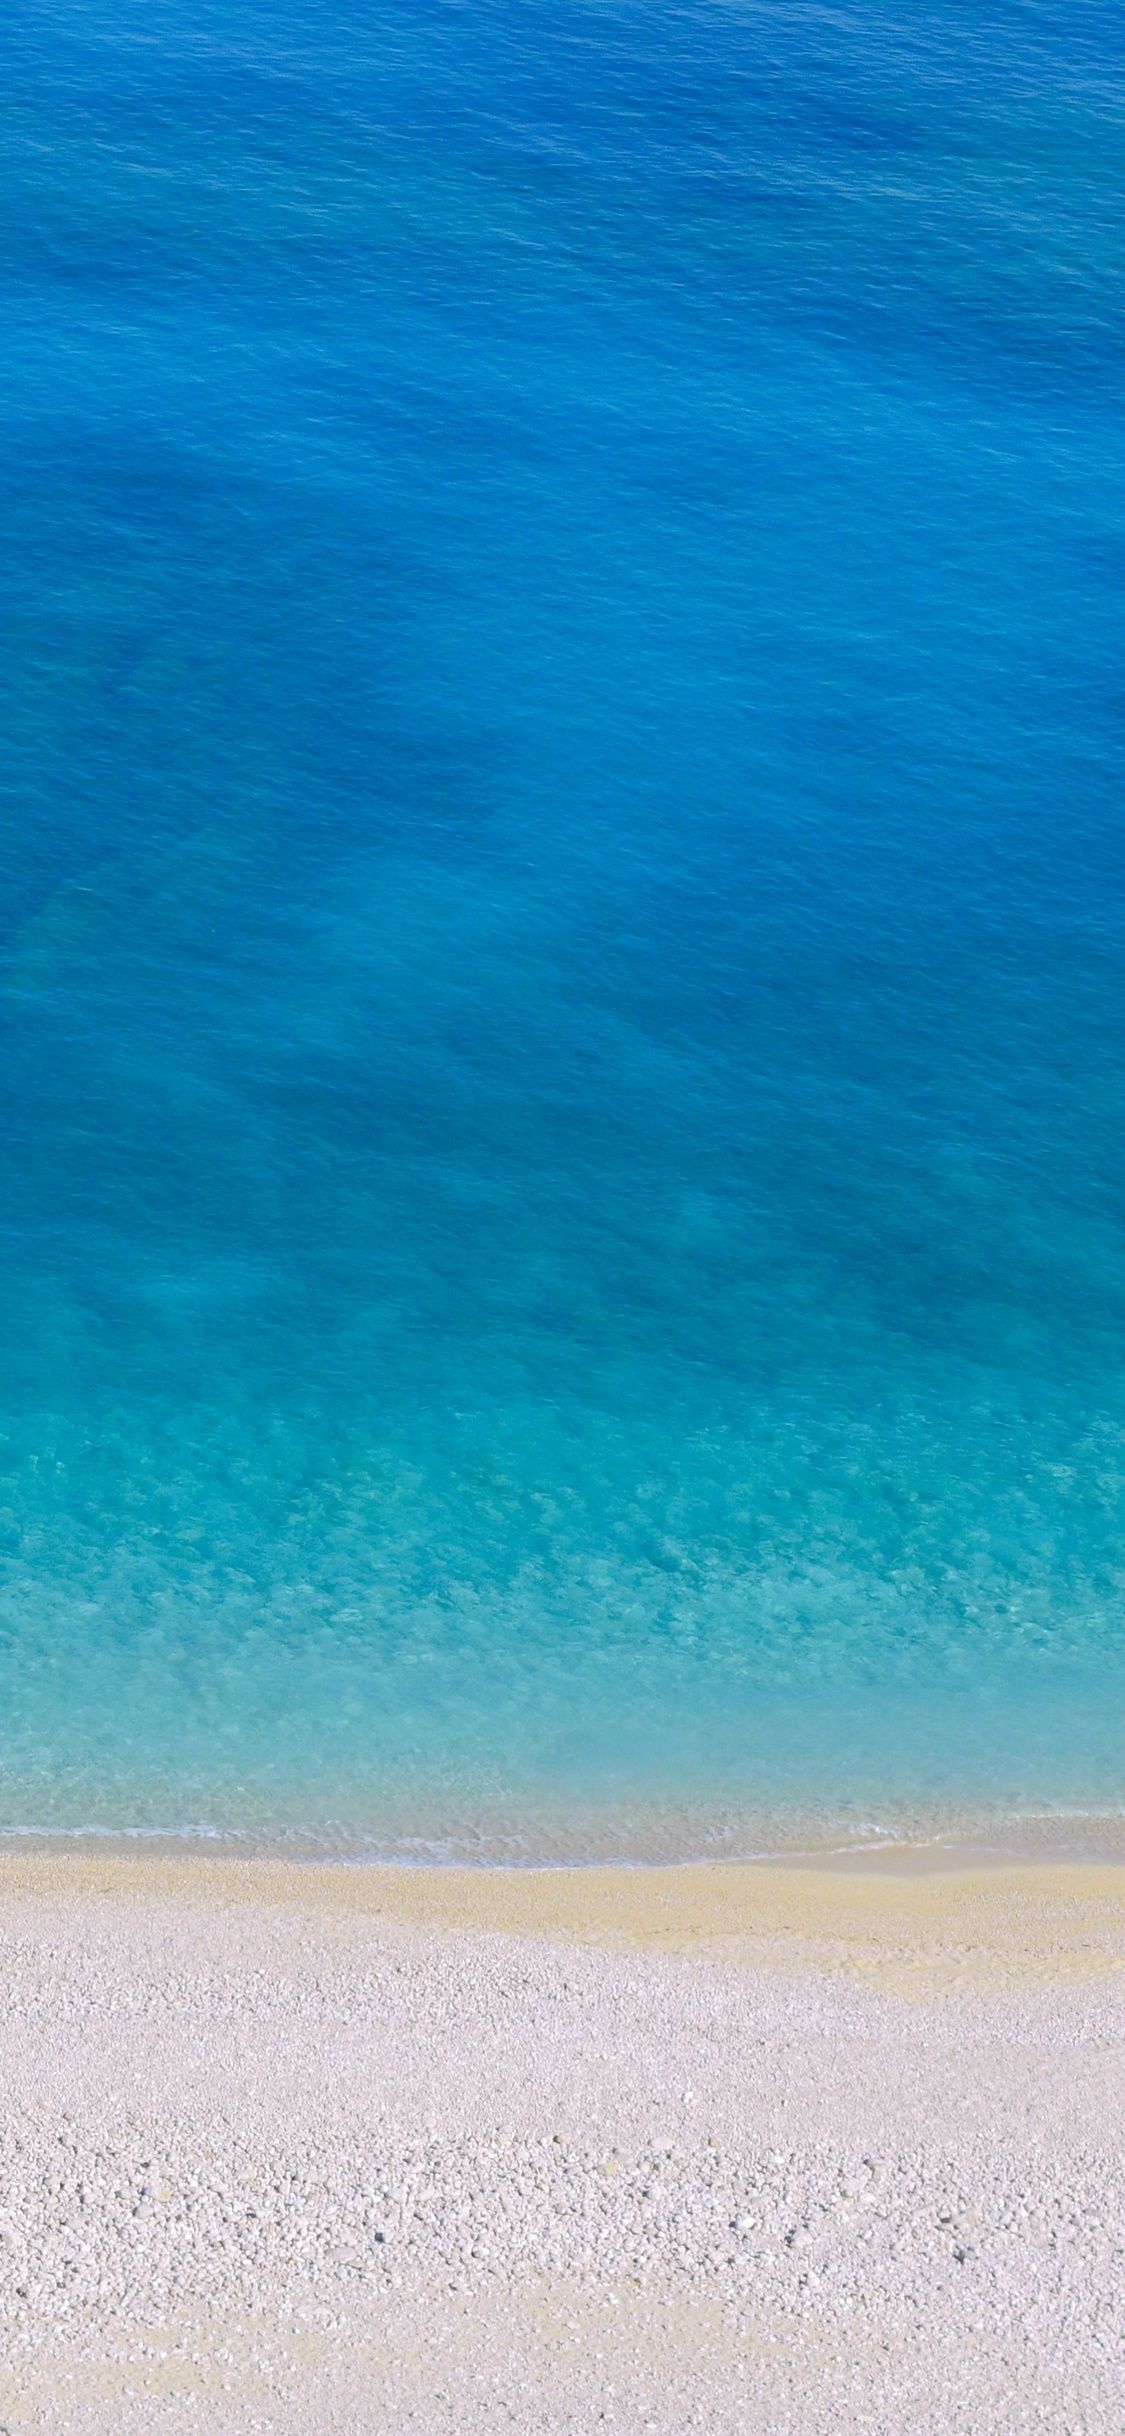 Turquoise Beach Island iPhone XS, iPhone iPhone X HD 4k Wallpaper, Image Phone Wallpaper